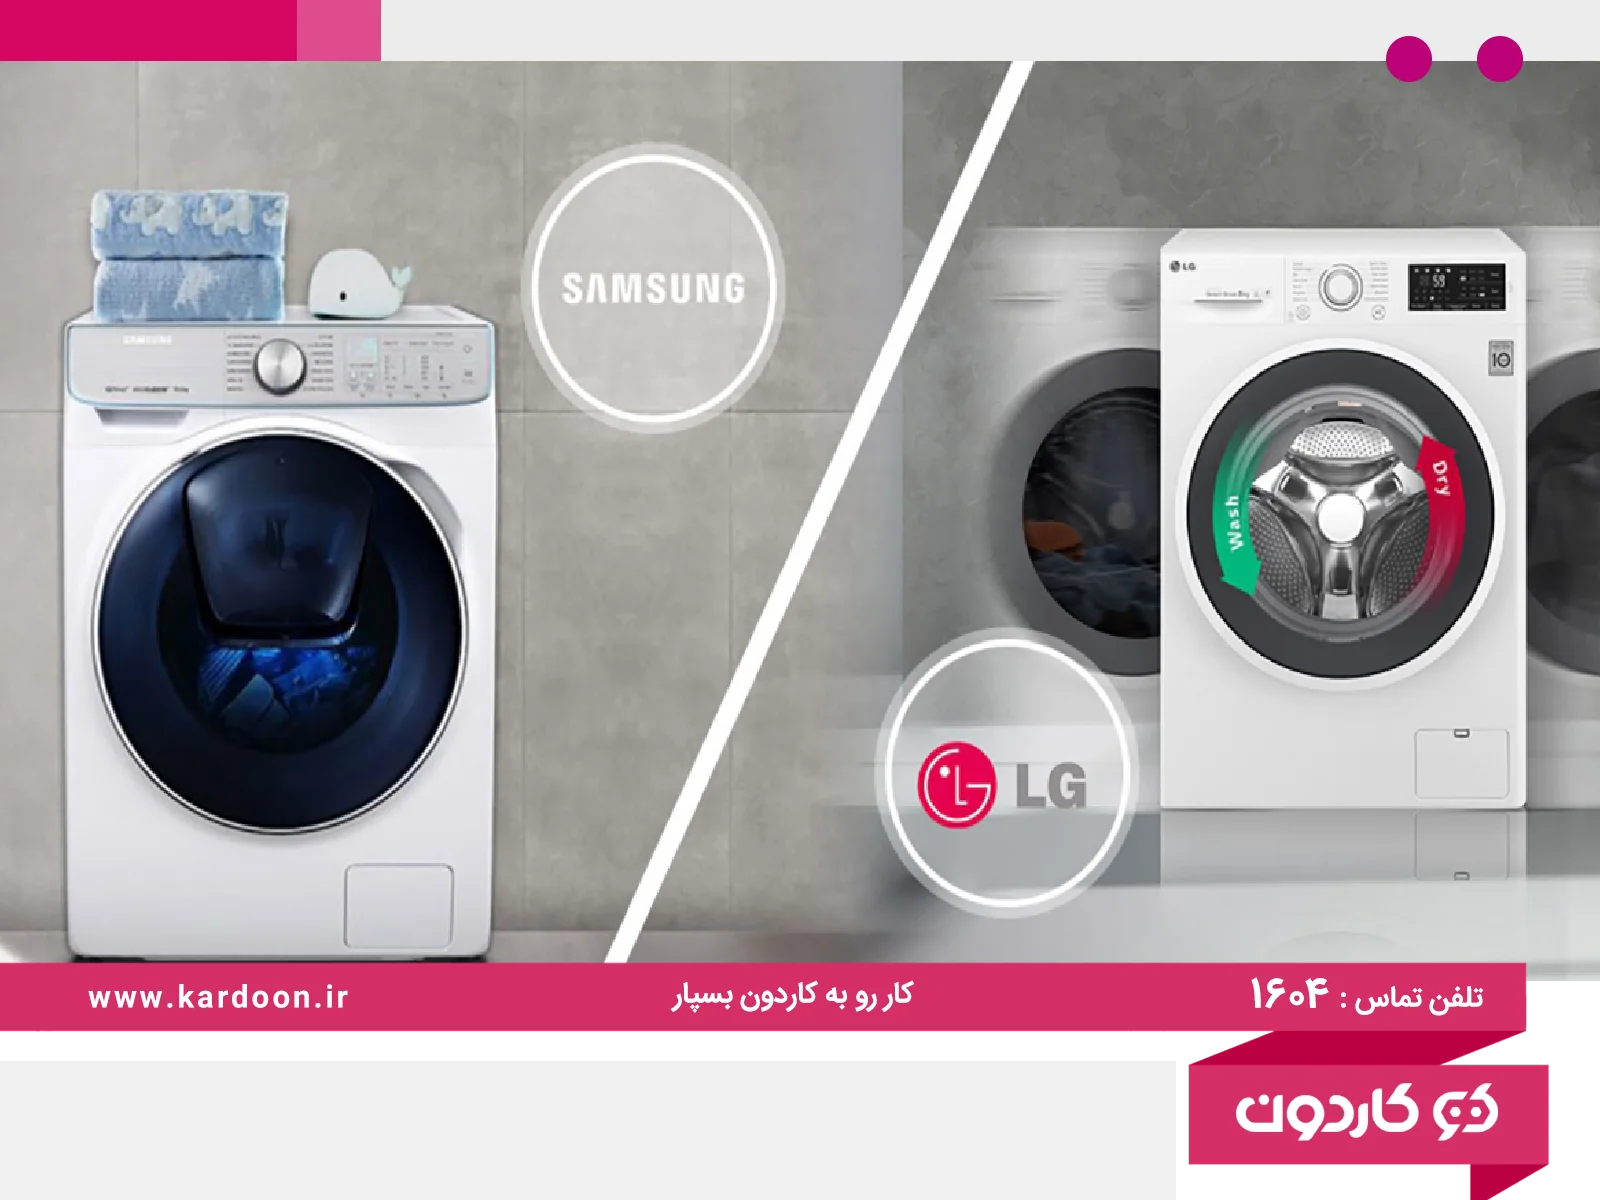 Is LG washing machine better or Samsung